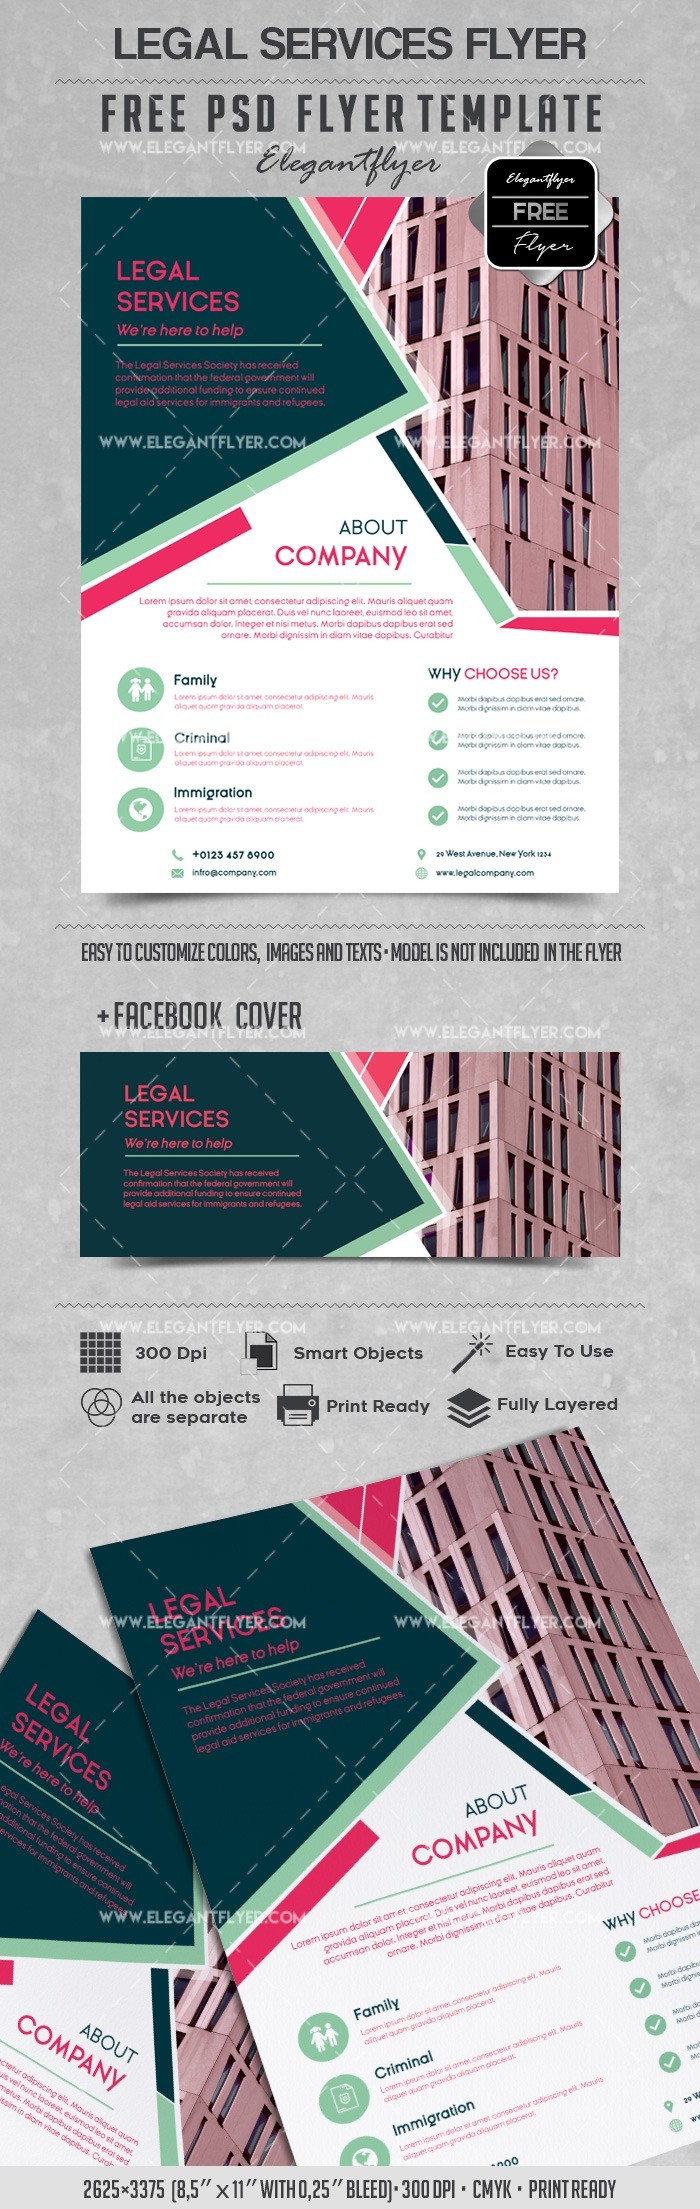 Legal Services Corp by ElegantFlyer